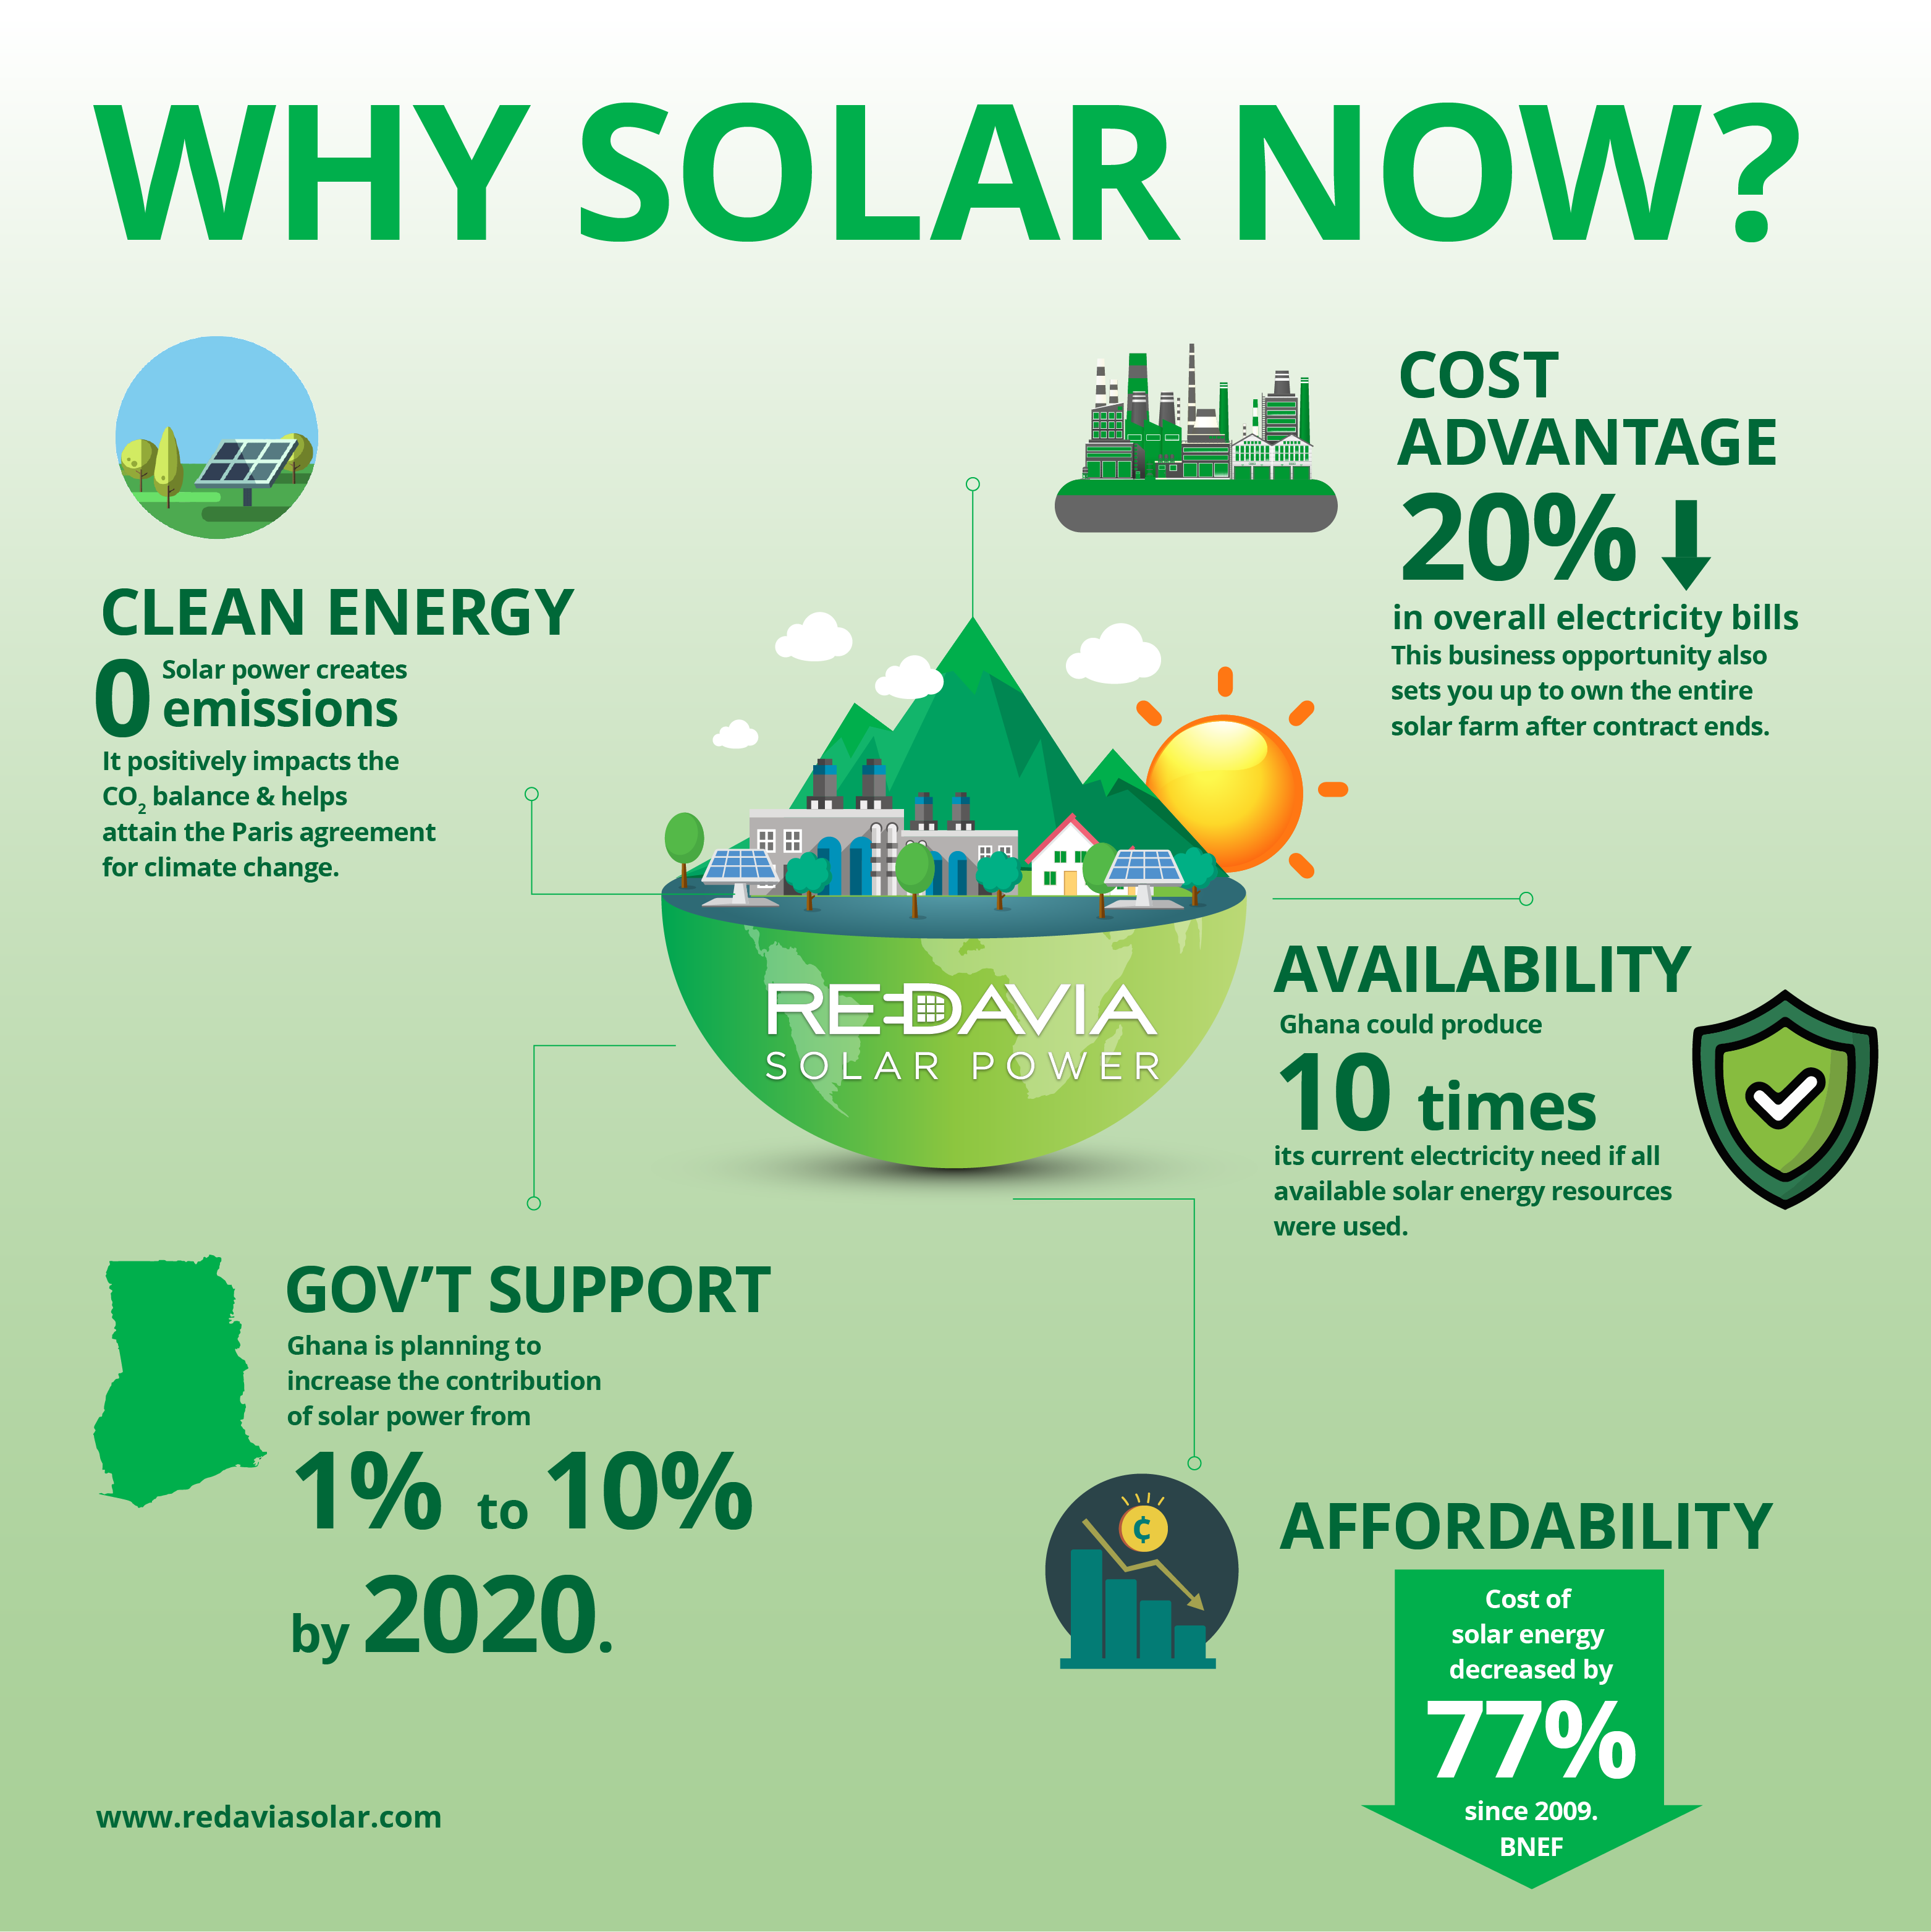 go-solar-now-redavia-solar-power-ghana